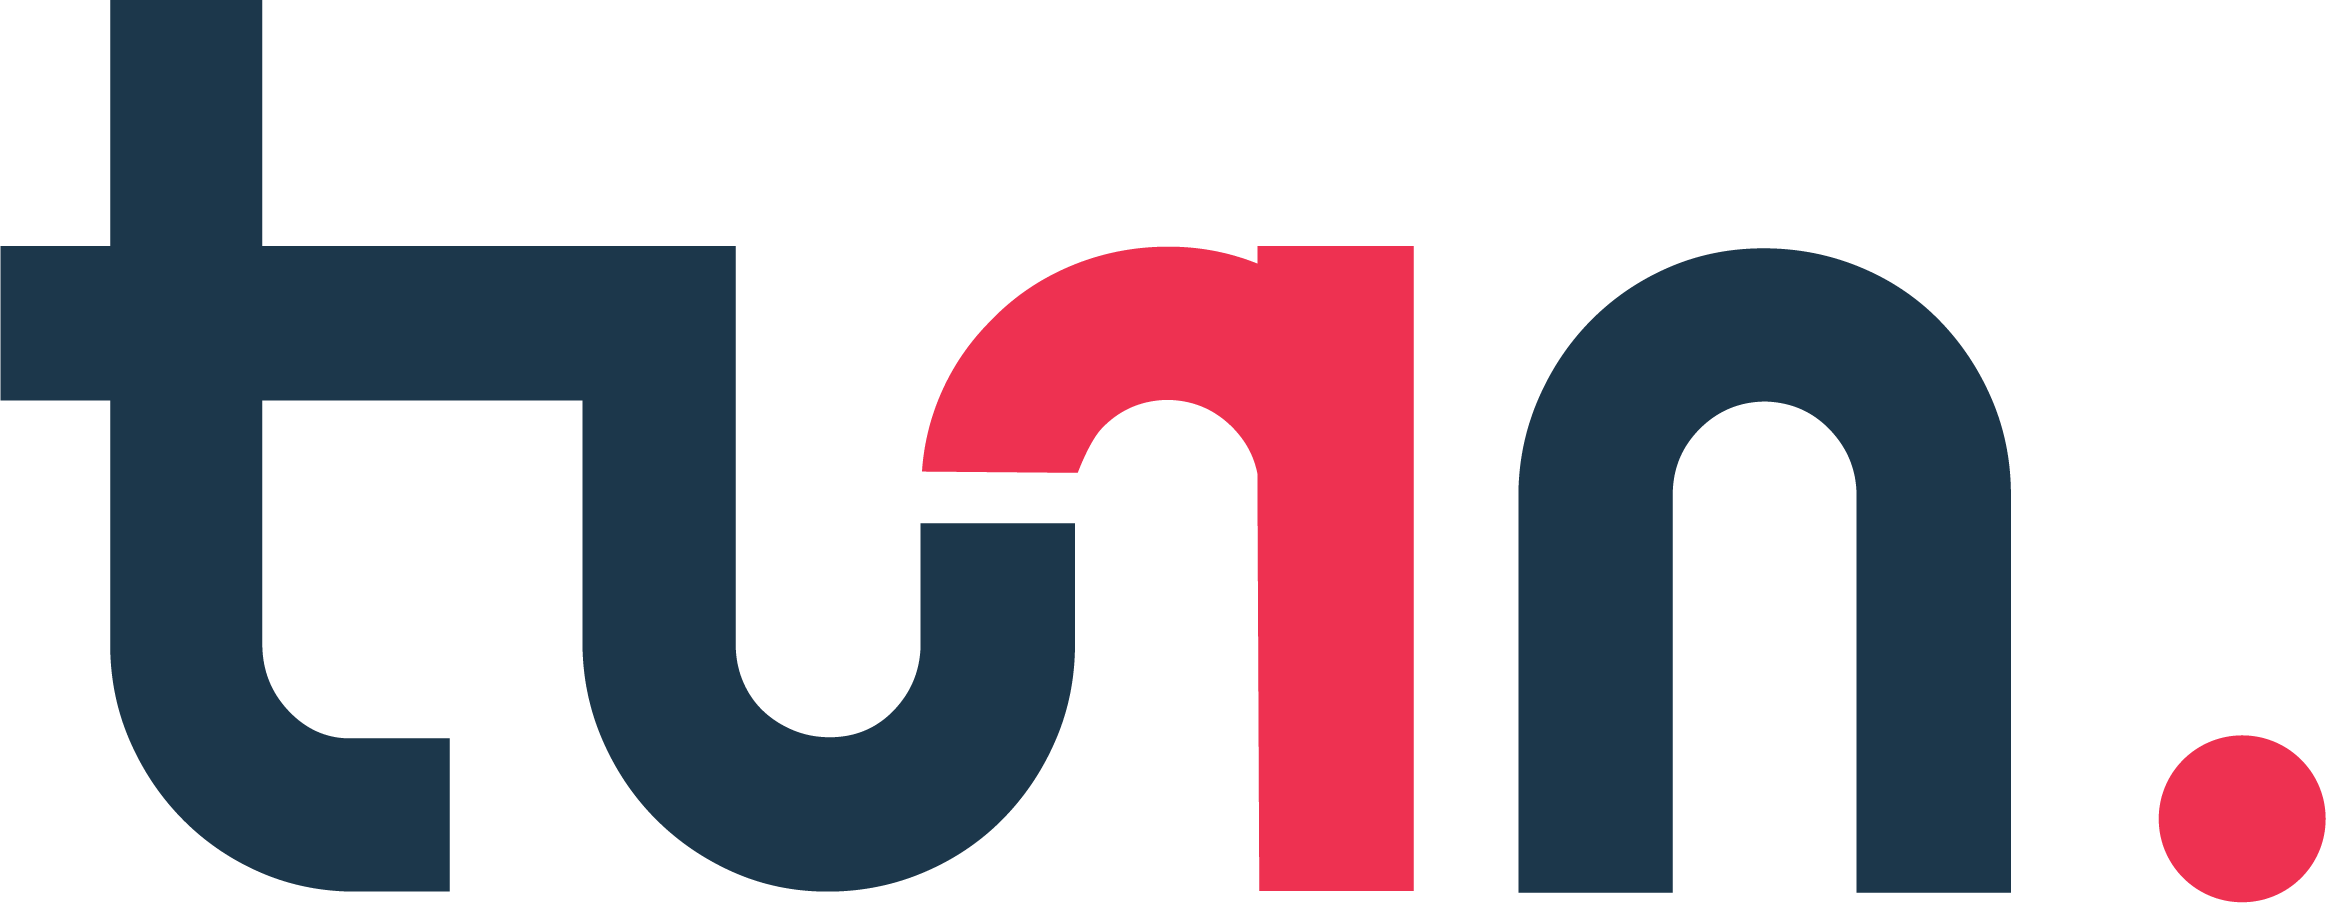 Turn Logo FullColor - About Us